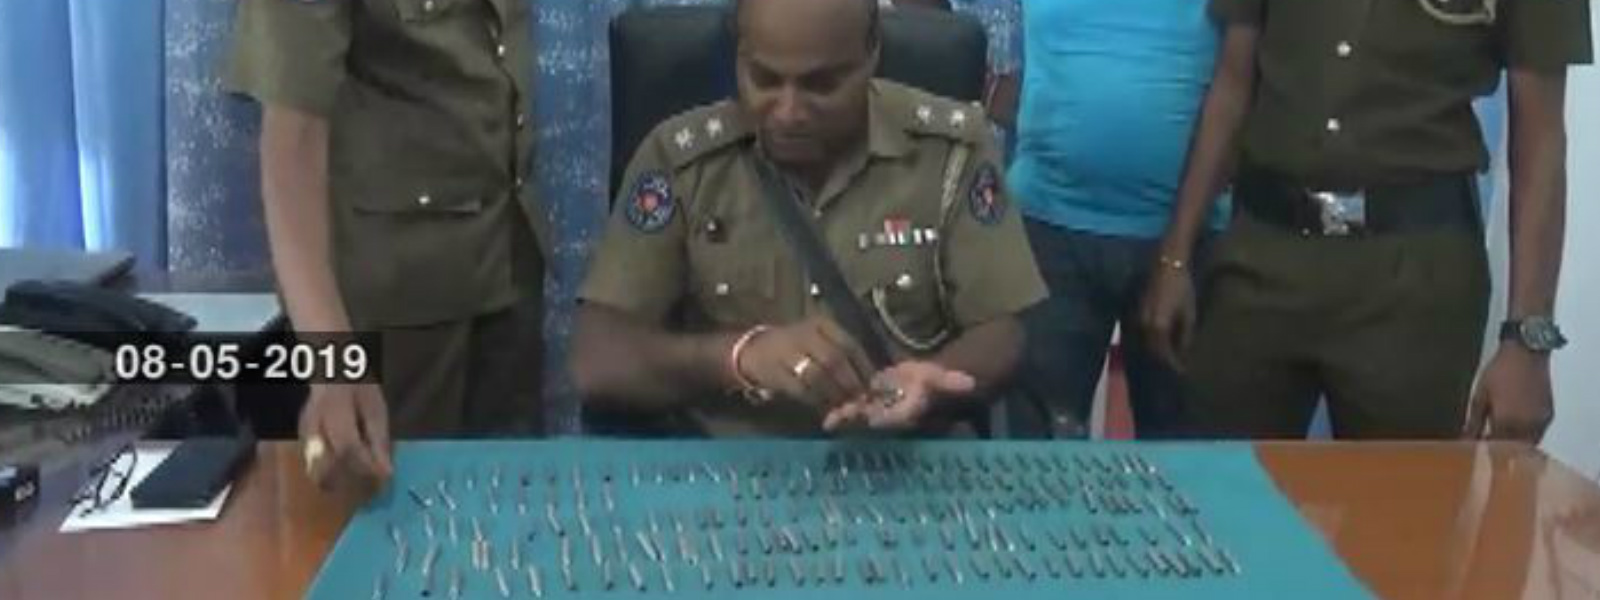 174 detonators found in Moragahahena